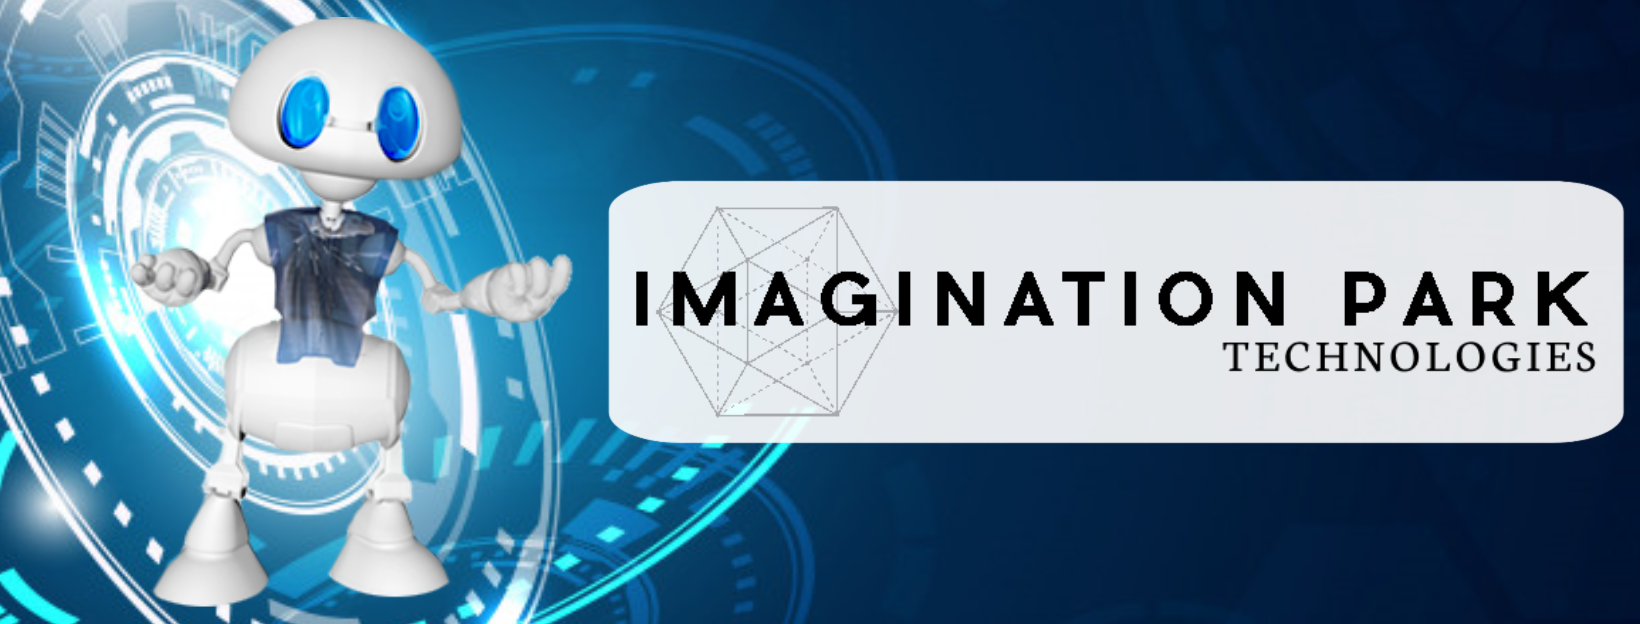 Imagination Park Announces First Quarter 2019 Results